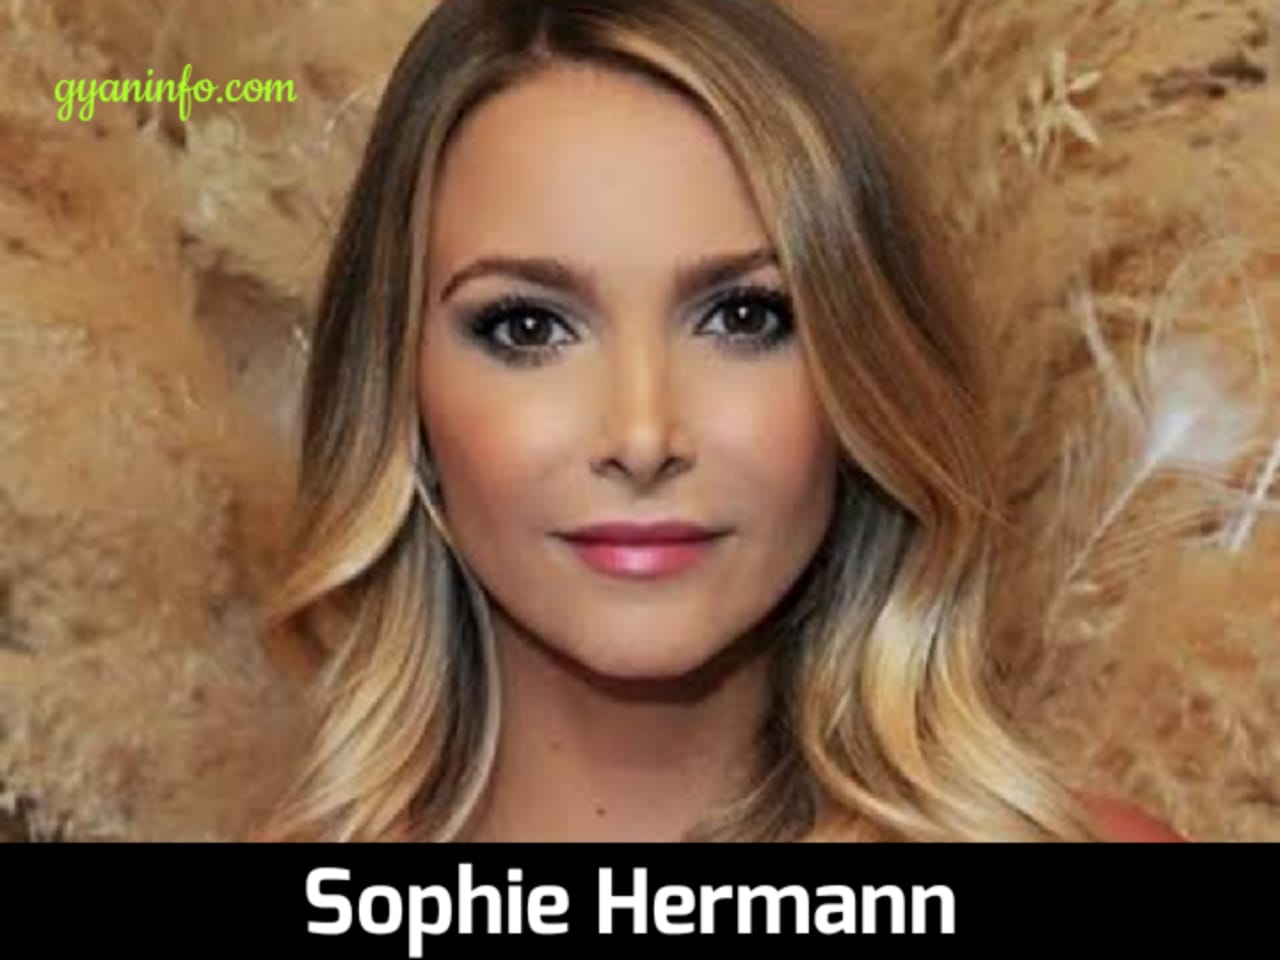 Sophie Hermann Biography, Height, Age, Weight, Body Measurements, Family, Boyfriend, Husband, Bio, Net Worth, Wiki & More